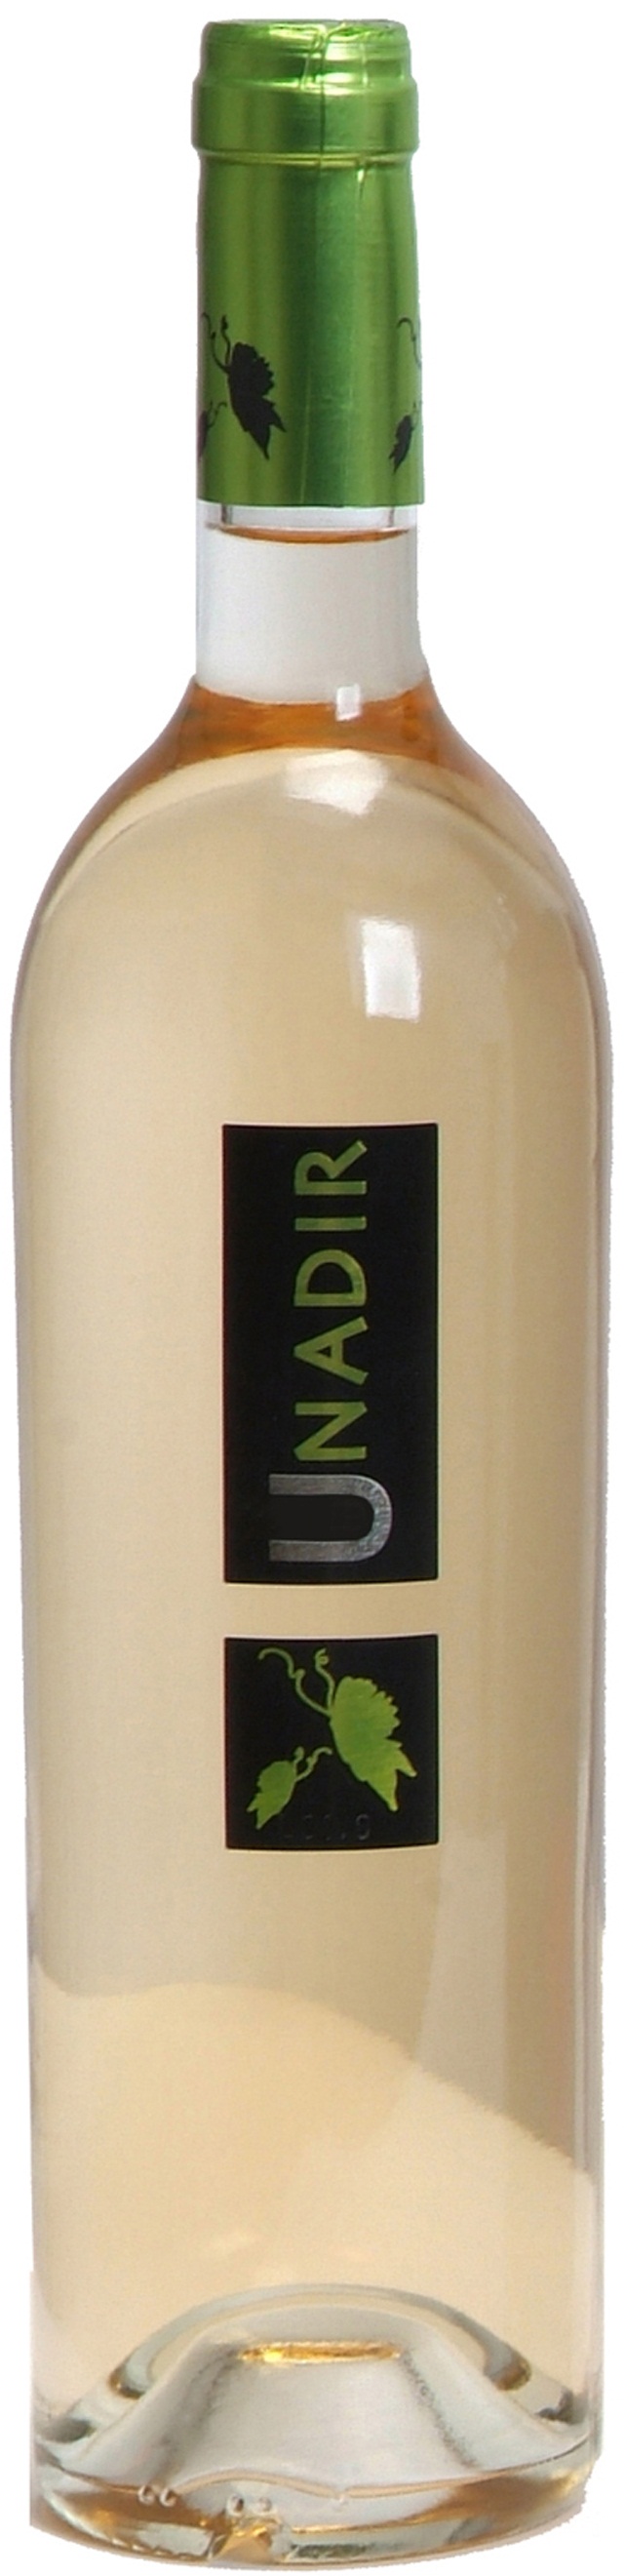 Image of Wine bottle Unadir Blanco